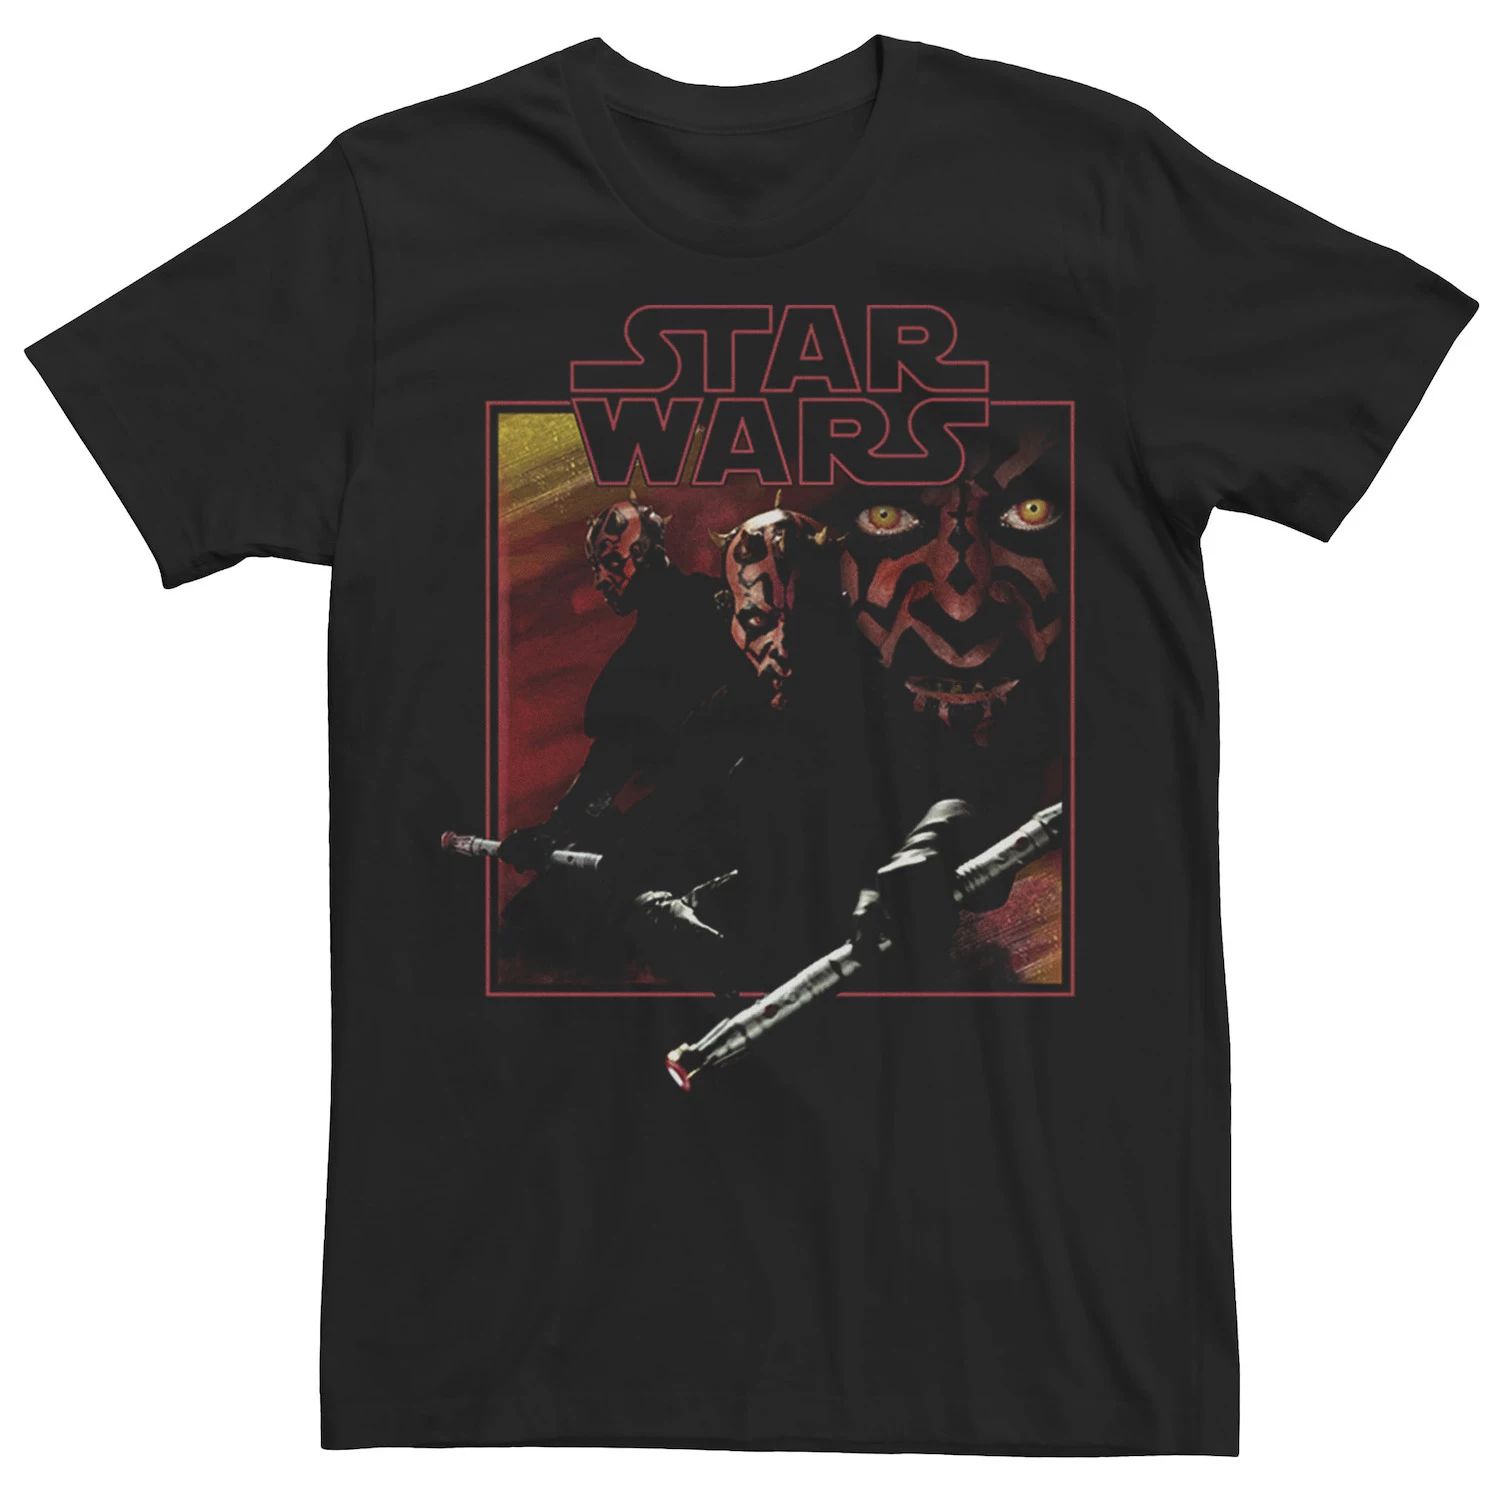 Мужская футболка с изображением портрета Дарта Мола из фильма Star Wars мужская футболка с анимацией дарта мола star wars